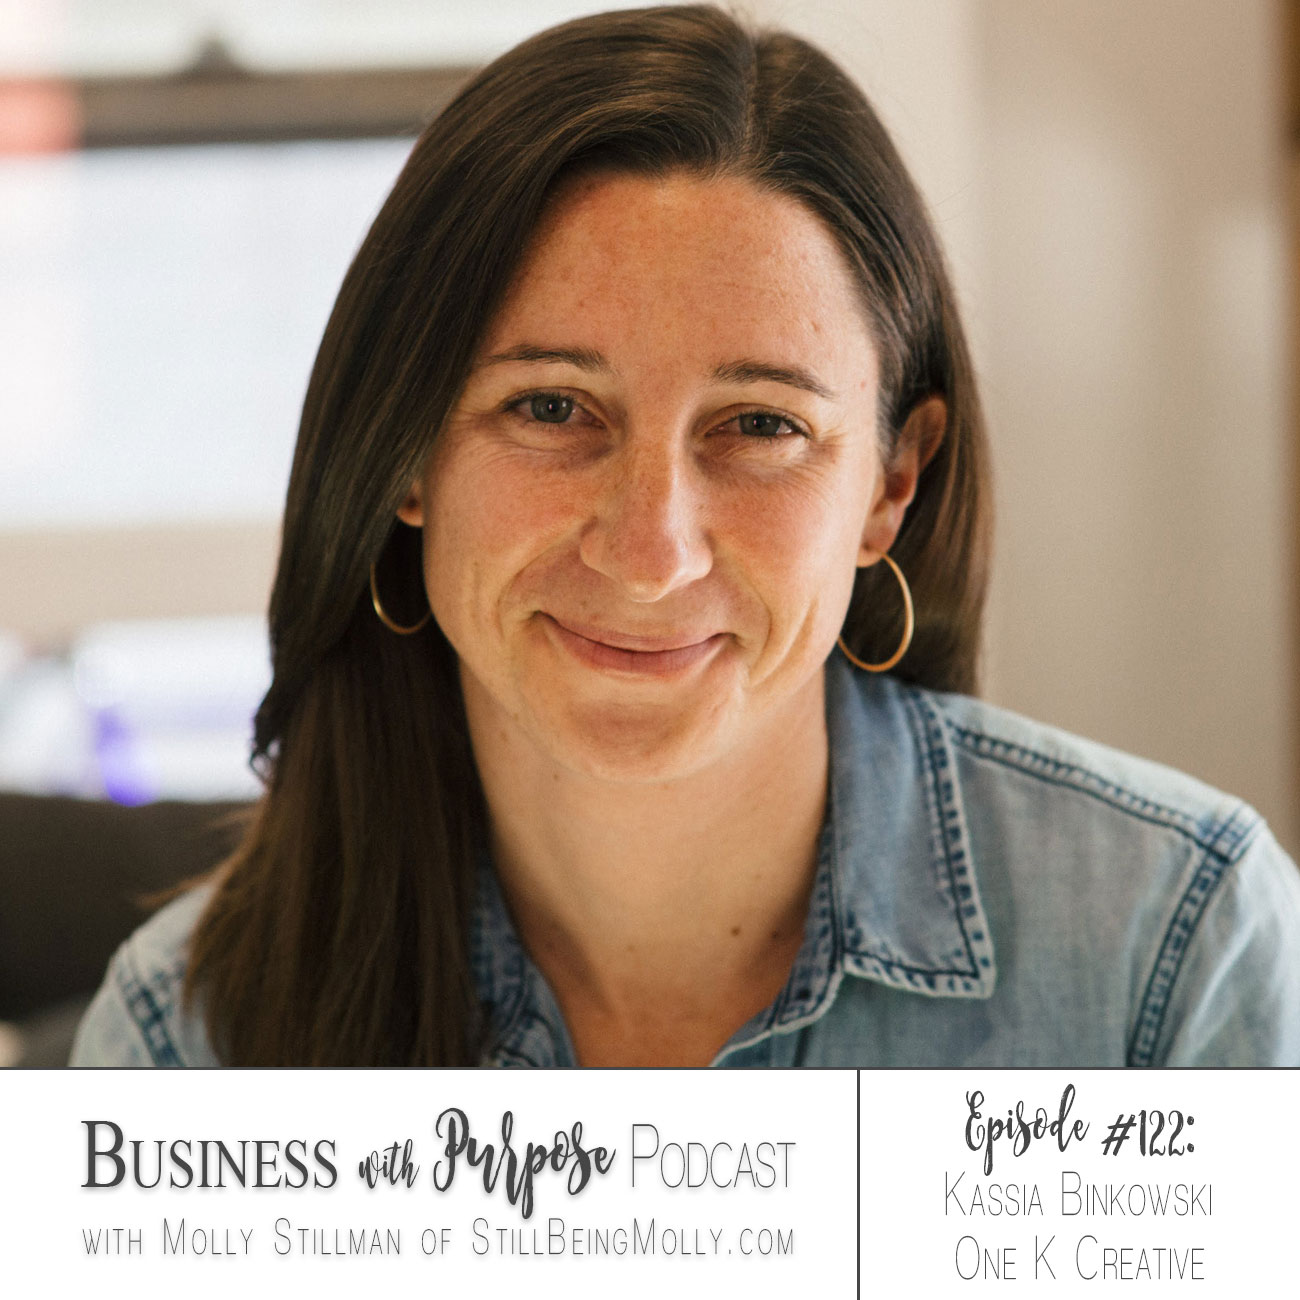 Business with Purpose Podcast EP 122: Kassia Binkowski, One K Creative